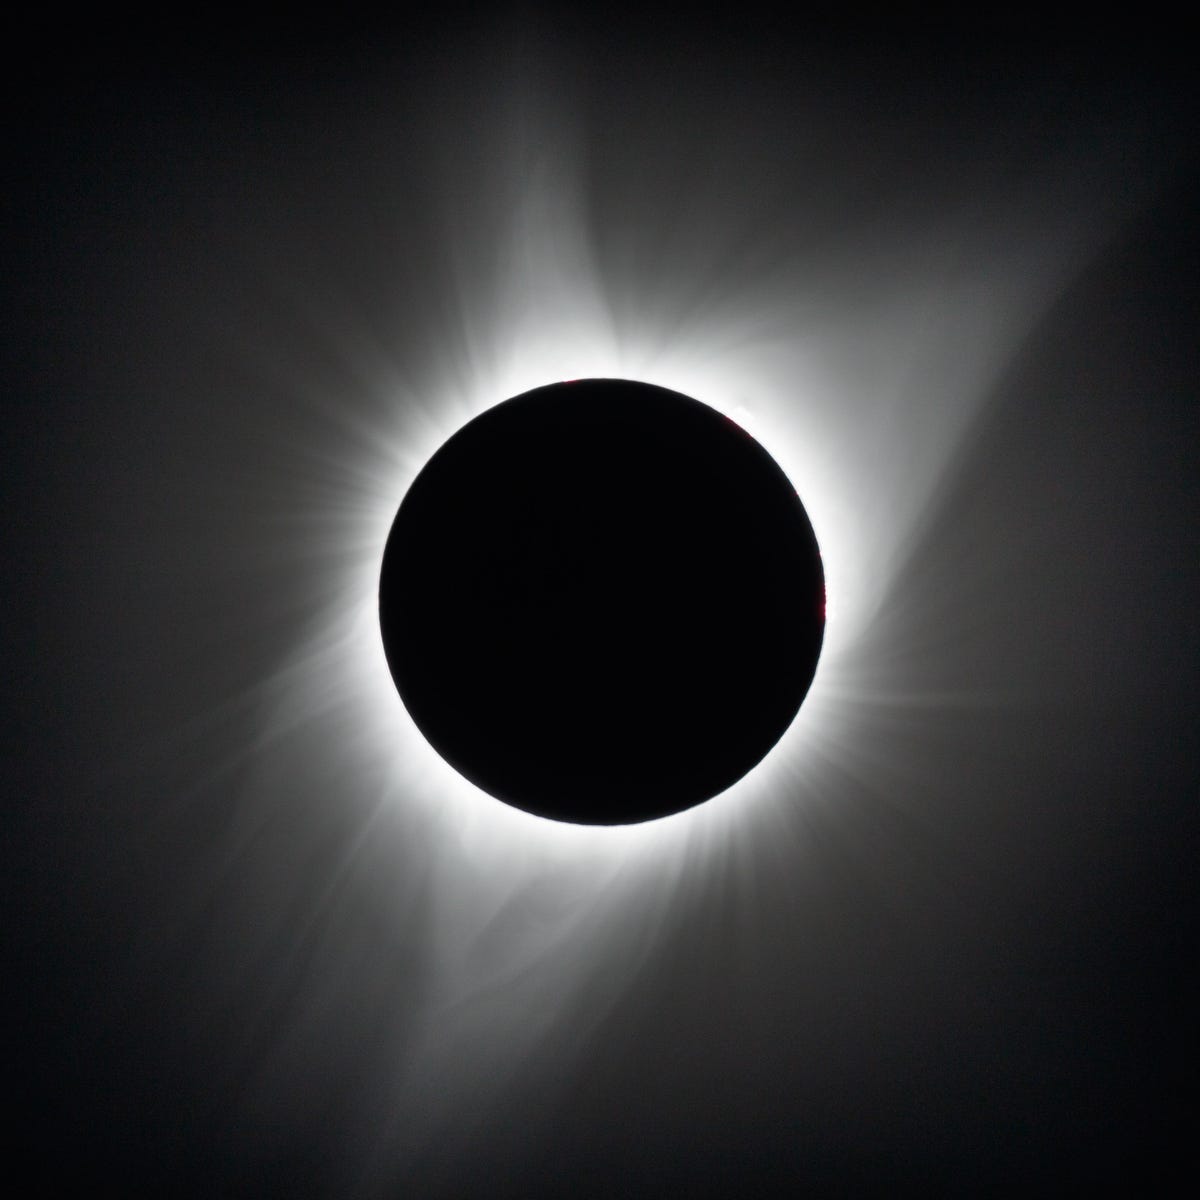 20170821-shankland-eclipse-14.jpg